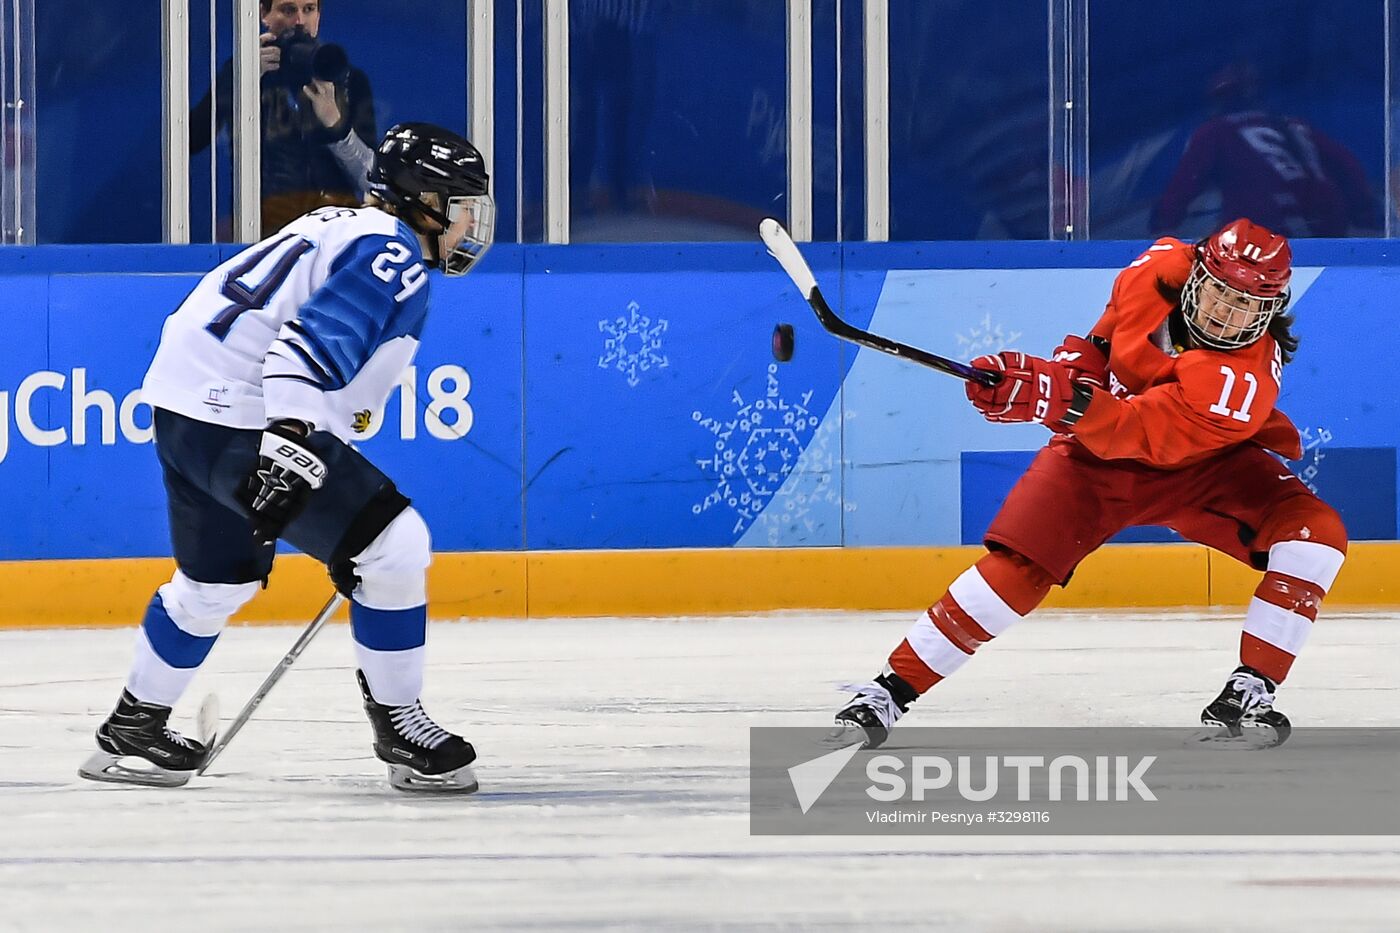 2018 Winter Olympics. Ice Hockey. Women. Russia vs Finland